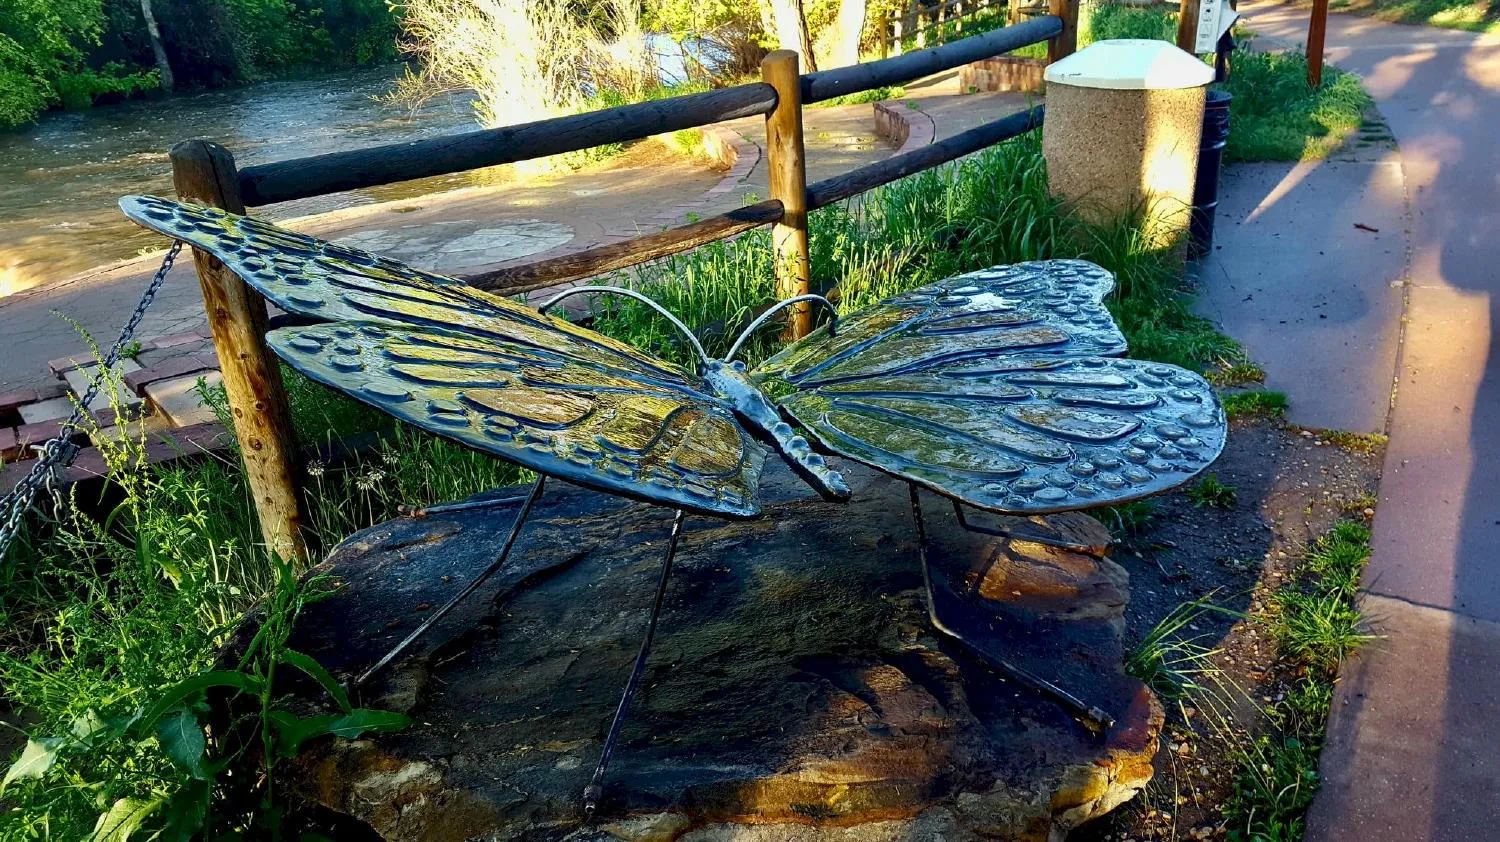 bronze butterfly sculpture - raindrops on sculpture & sidewalk, morning sun slanting across scene